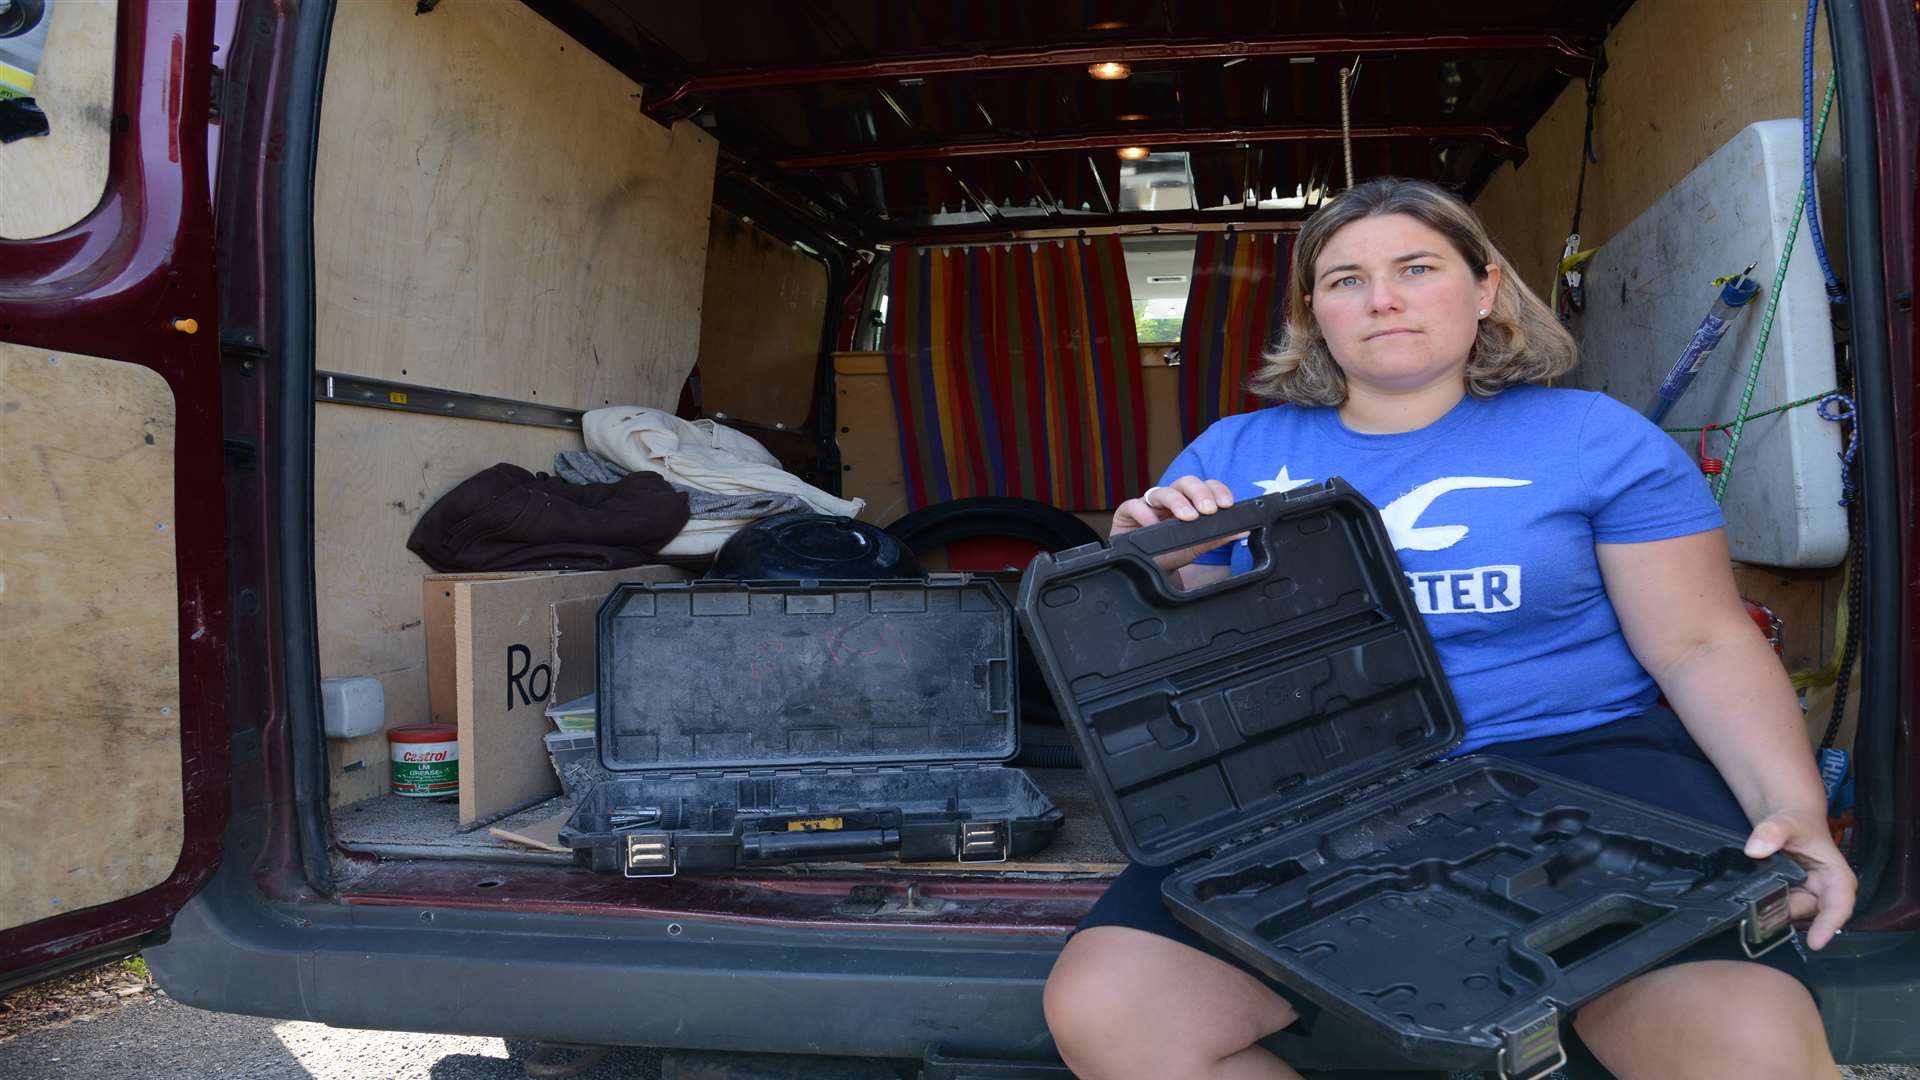 Robyn Mapp who had her van broken into and £4,000 worth of equipment stolen